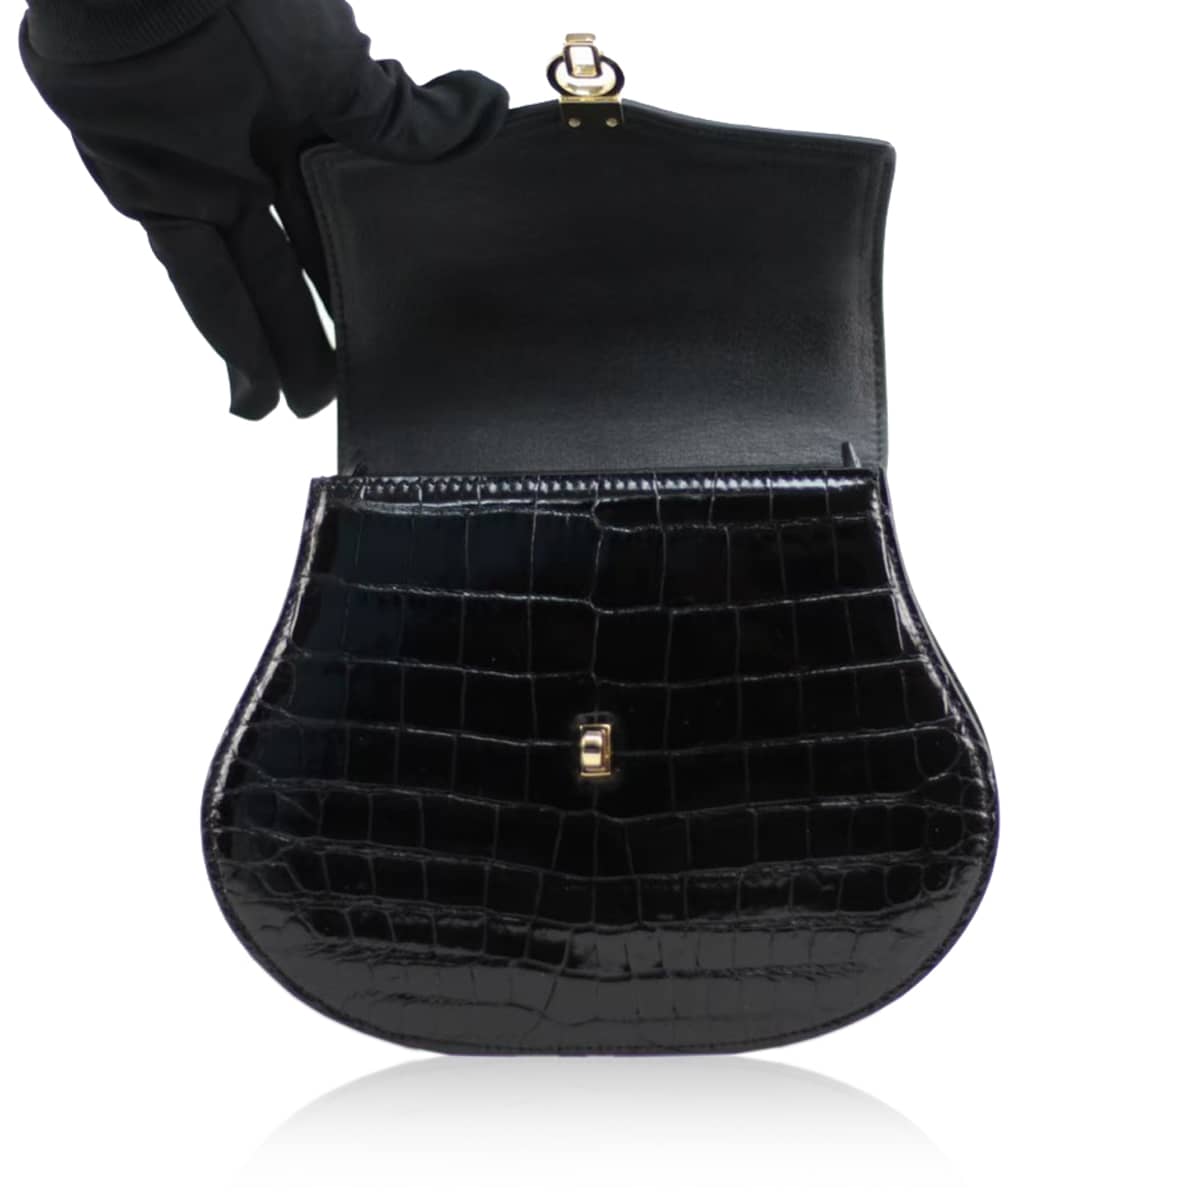 VIRANDA Baby Shiny Black Crocodile Belly Leather Handbag Size 21